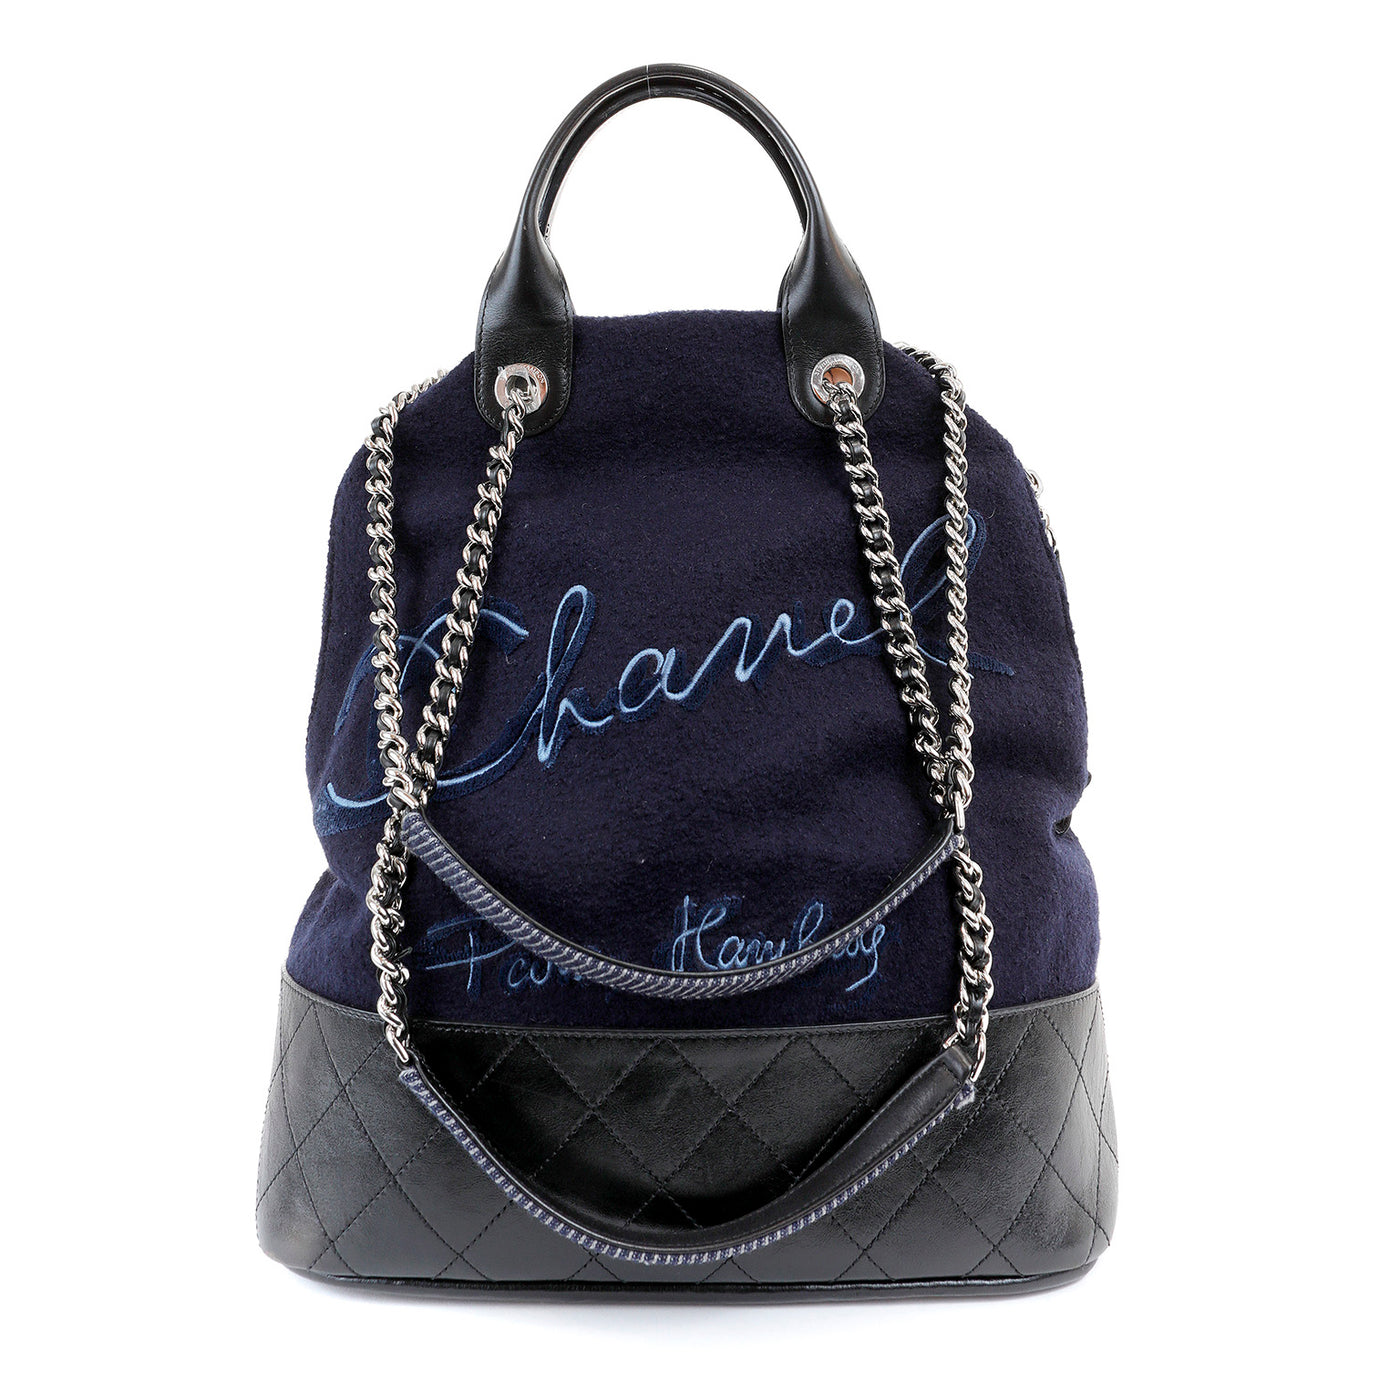 Chanel Navy Blue Felt Bowler Bag w/ CC Embroidery